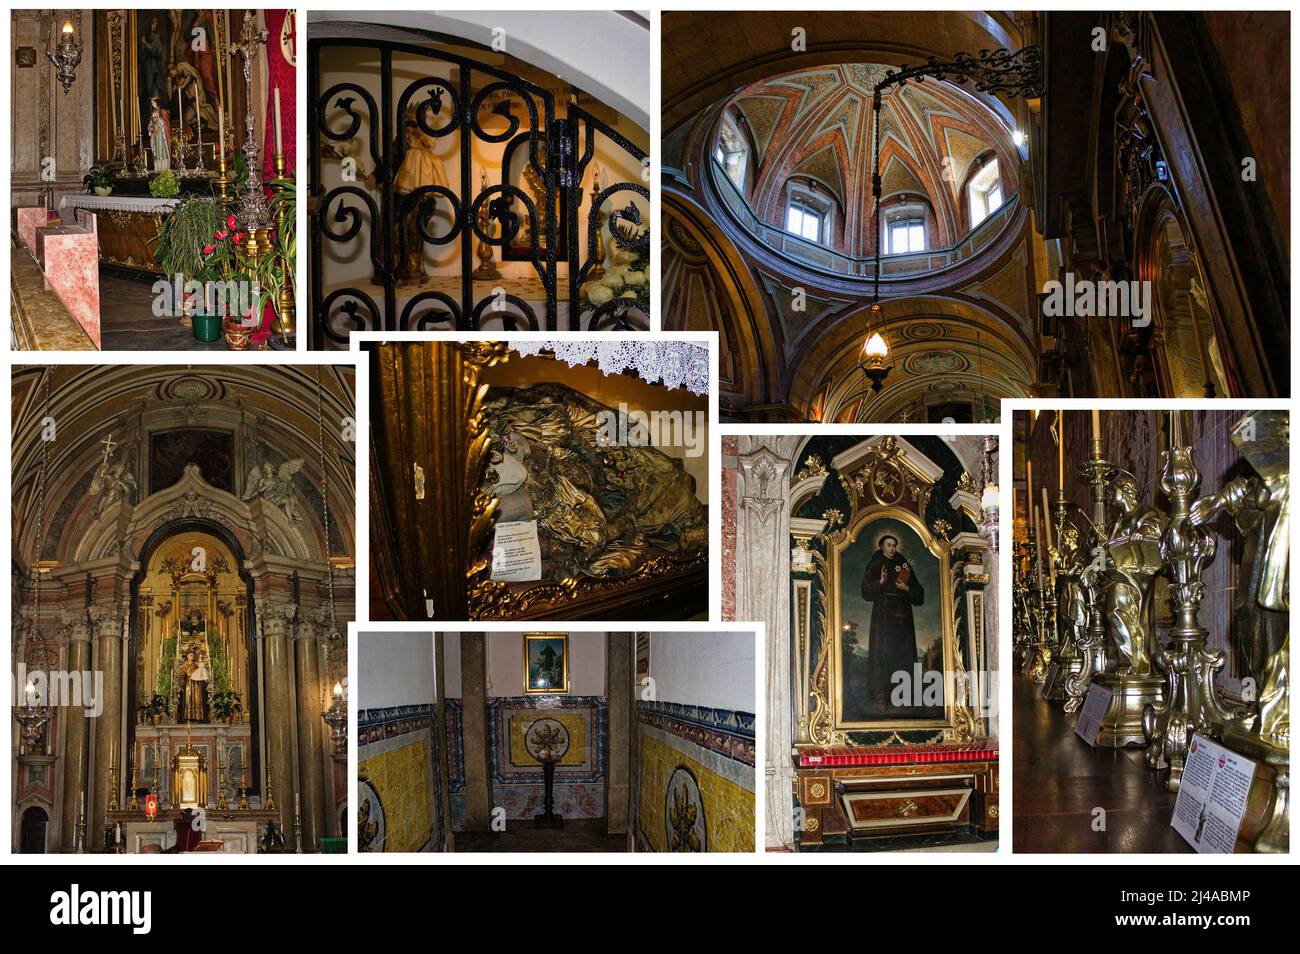 Interiors of the Church of Saint Anthony (Igreja de Santo Antonio) in Lisbon, Portugal. Stock Photo